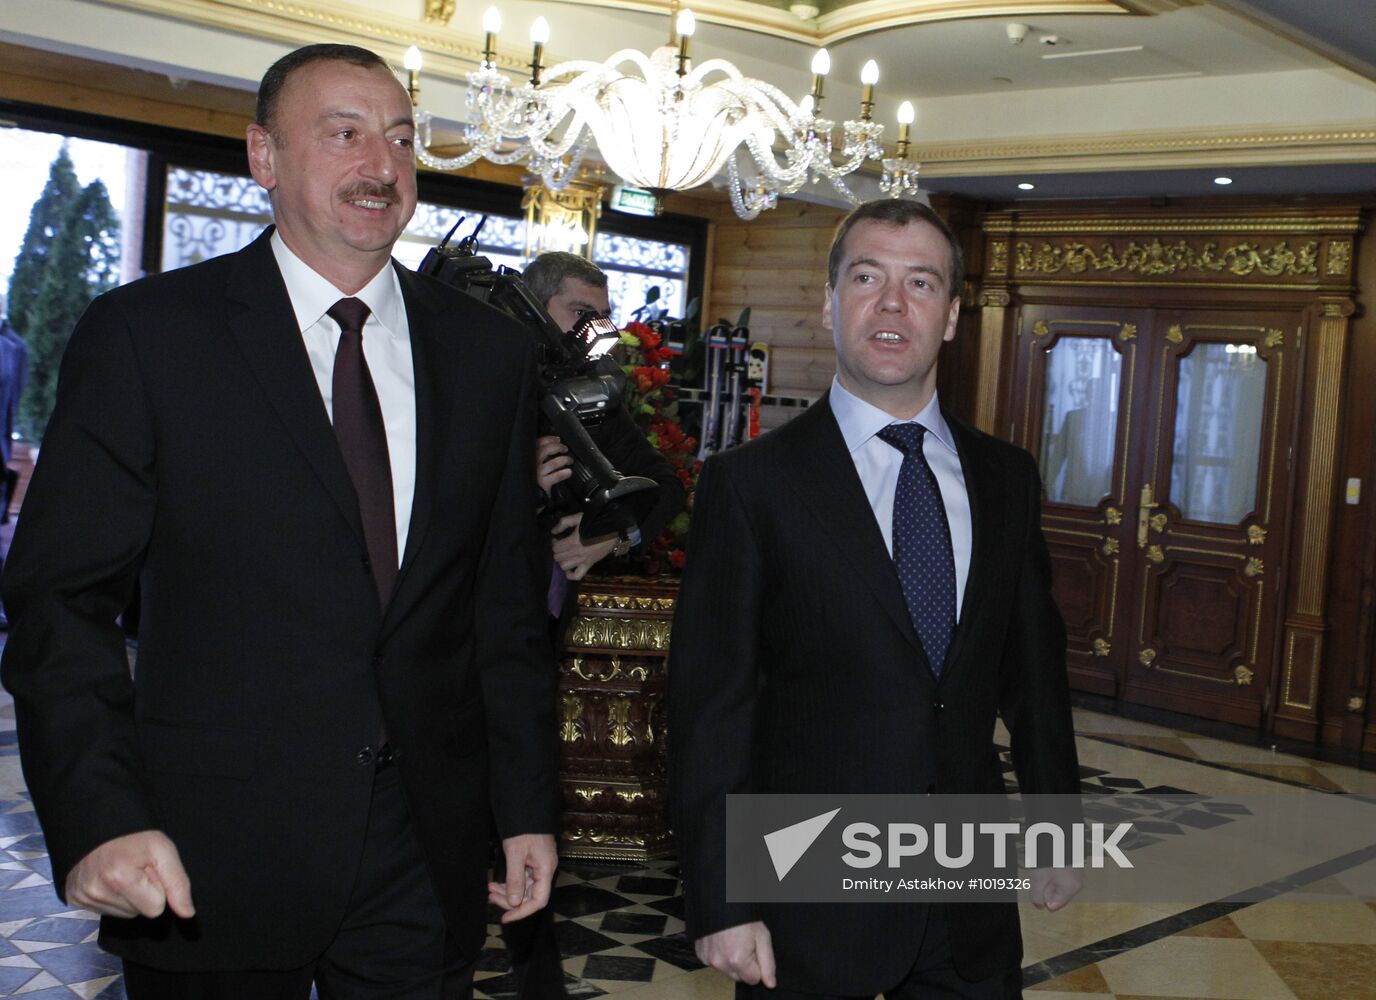 D.Medvedev meets with I.Aliyev